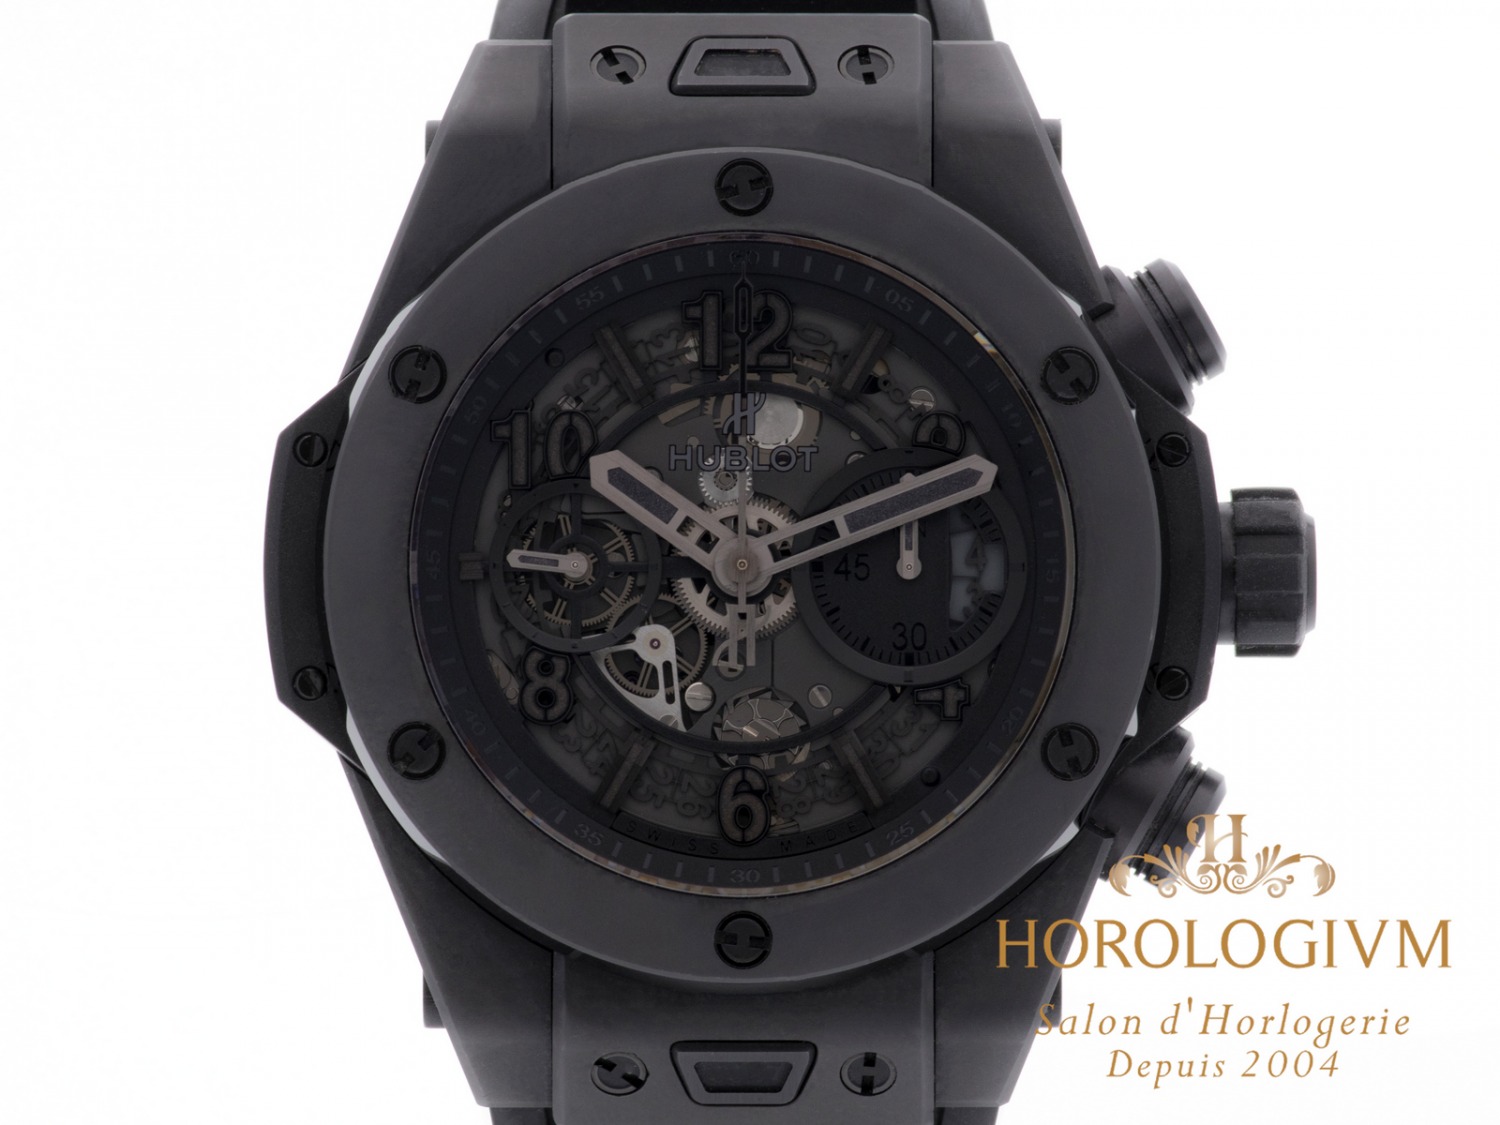 Hublot Big Bang Ceramic UNICO 45MM Ref. 411.CI.1110.RX Limited Edition 1000 pcs watch, brushed black